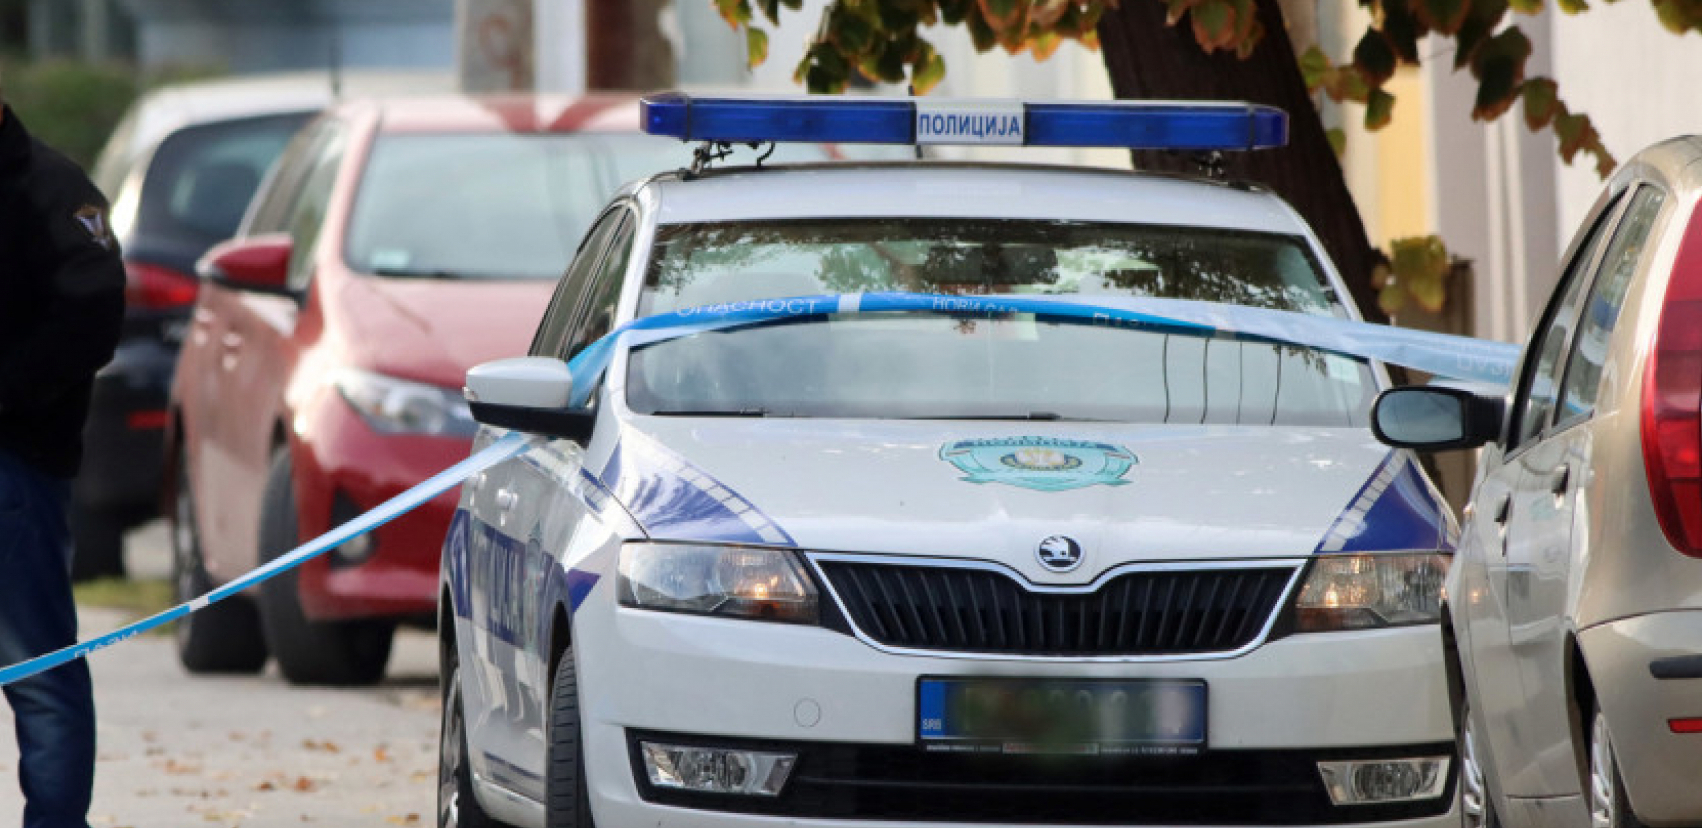 UŽAS U LESKOVCU Taksistu (40) mušterija ubola u lice